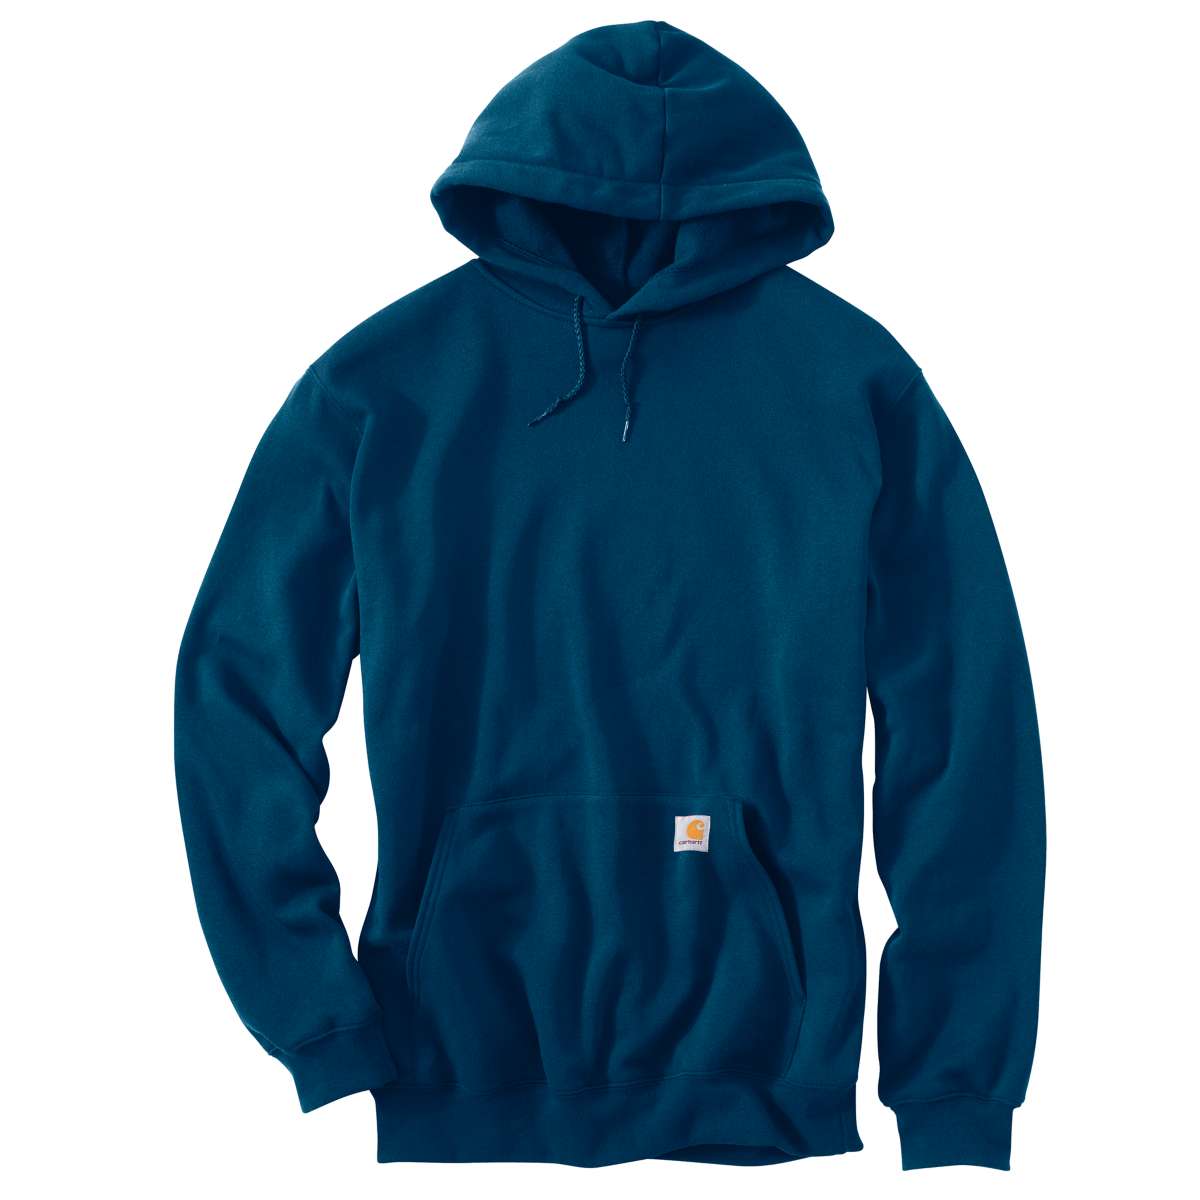 Carhartt Custom Sweatshirts & Company Apparel - Superior Business